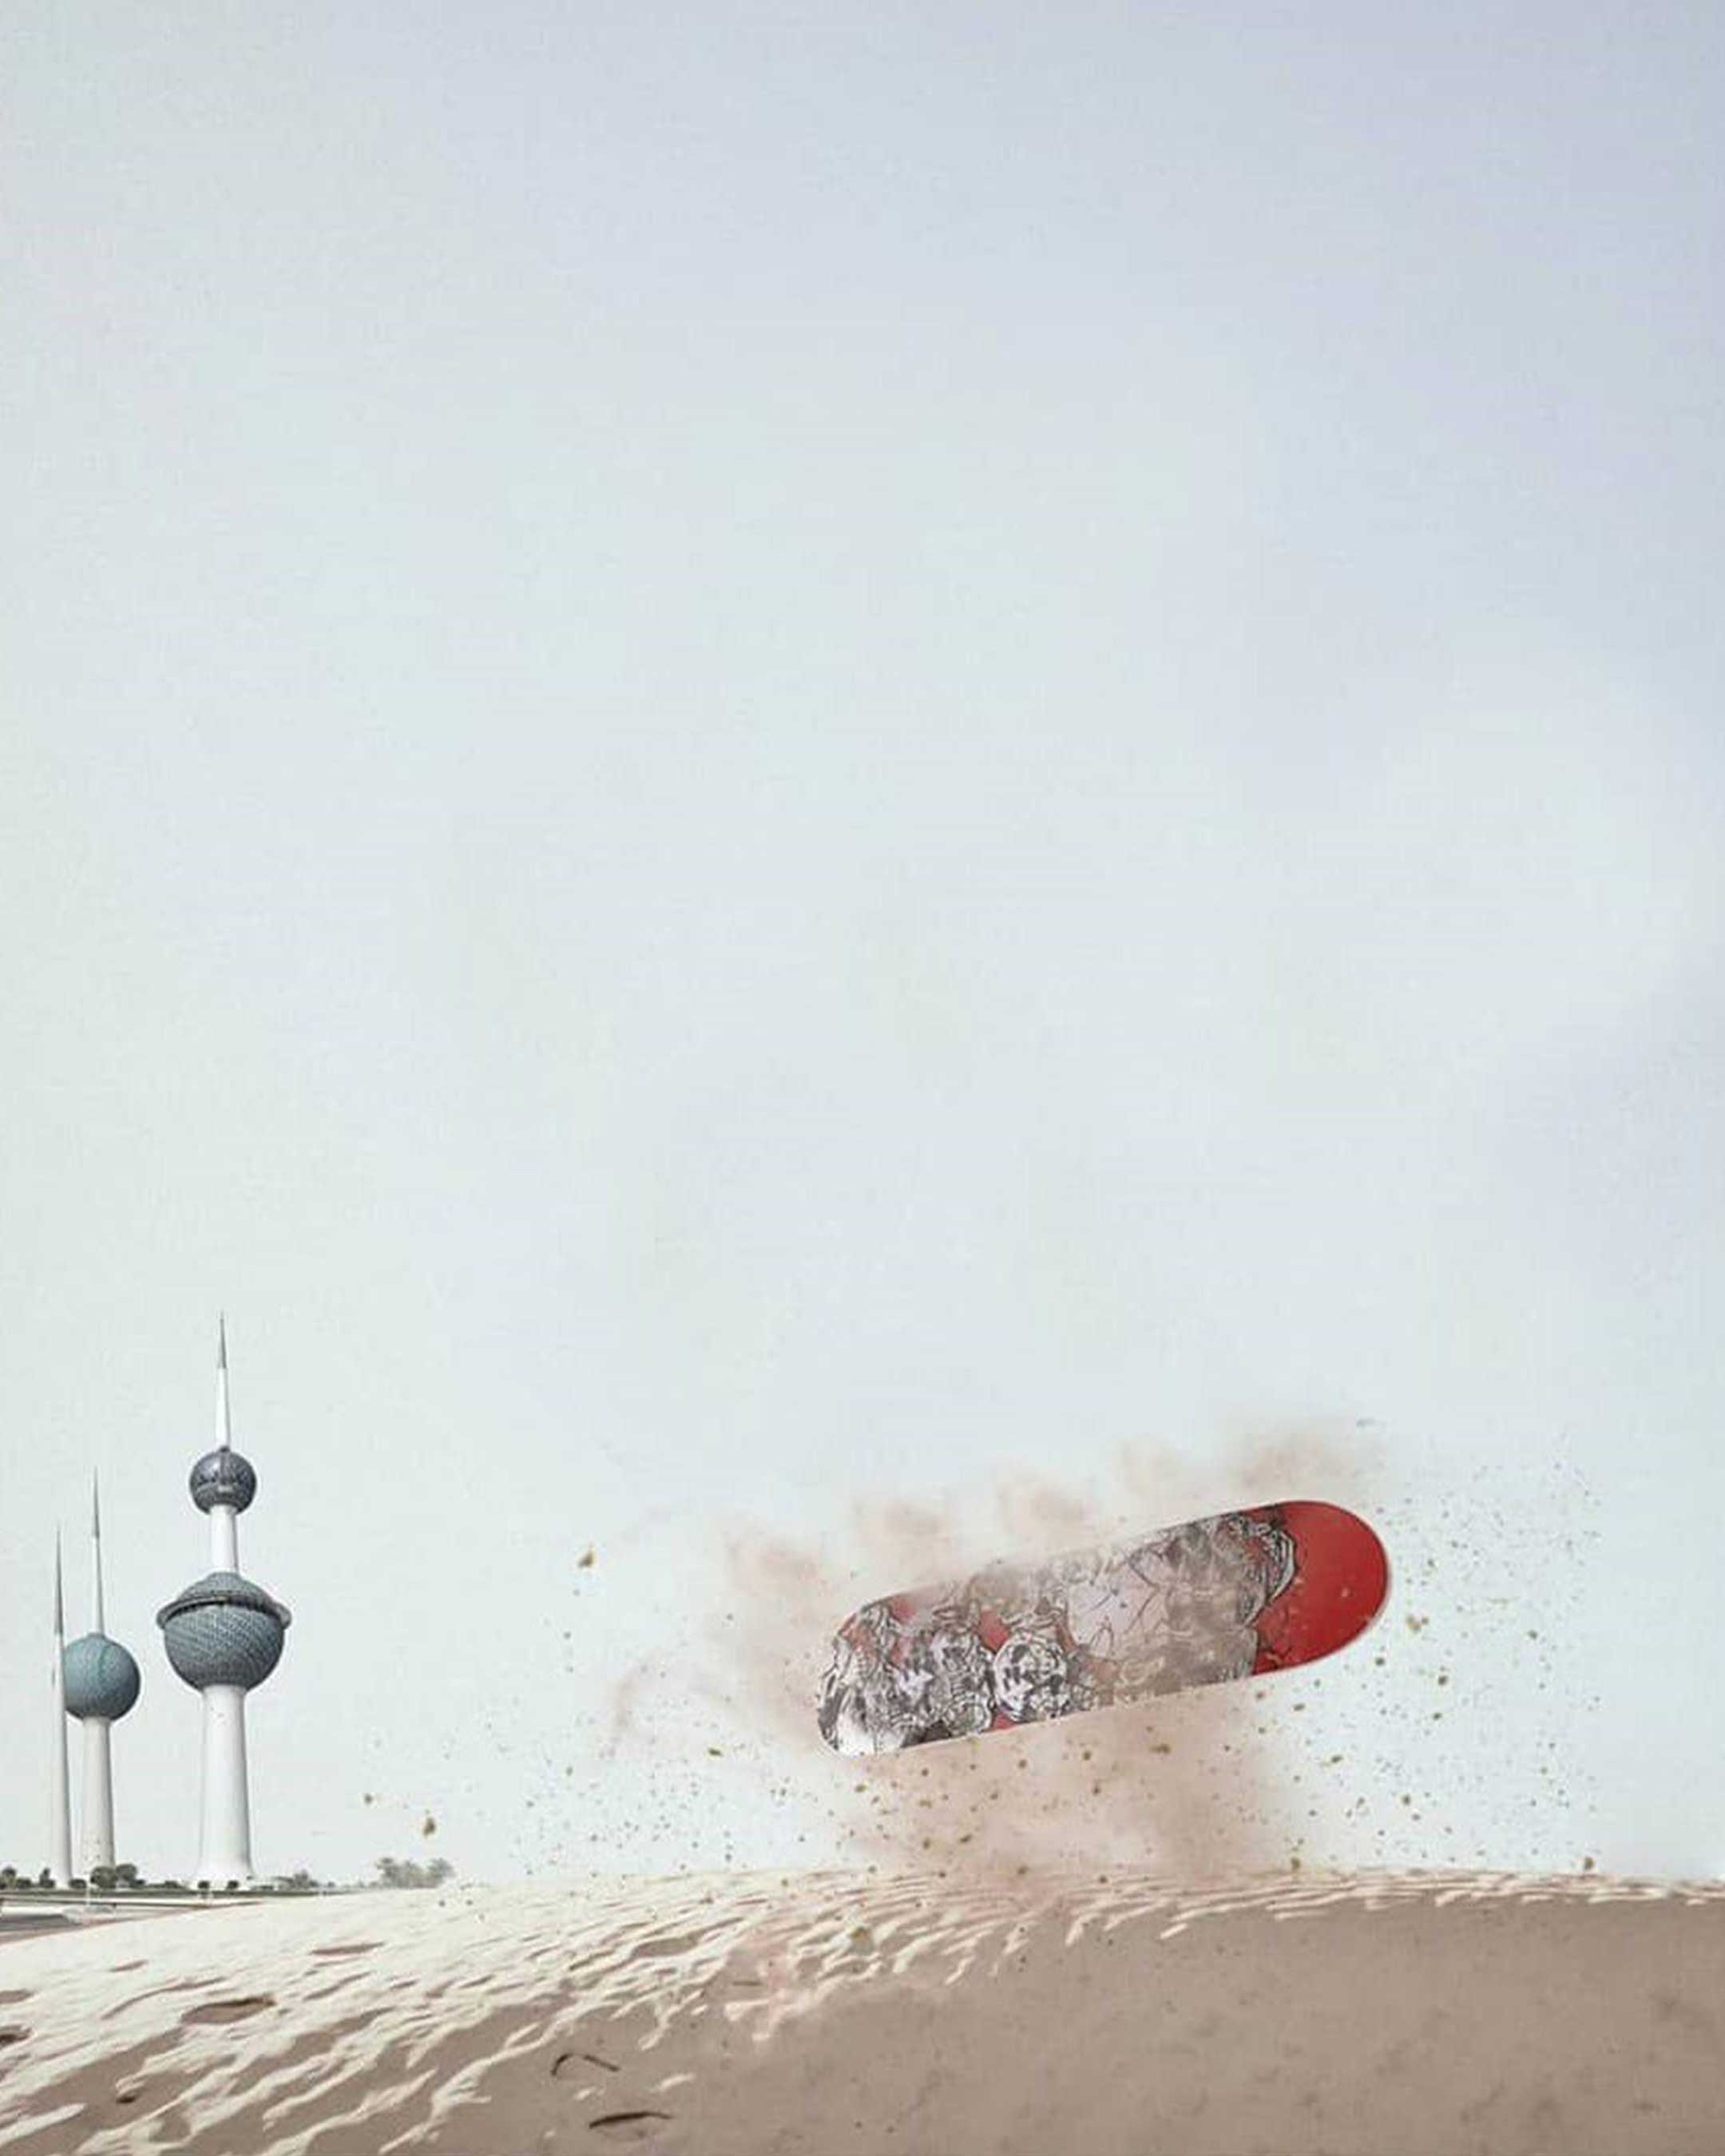 Skateboard Desert Photo Editing Background Free Stock Image